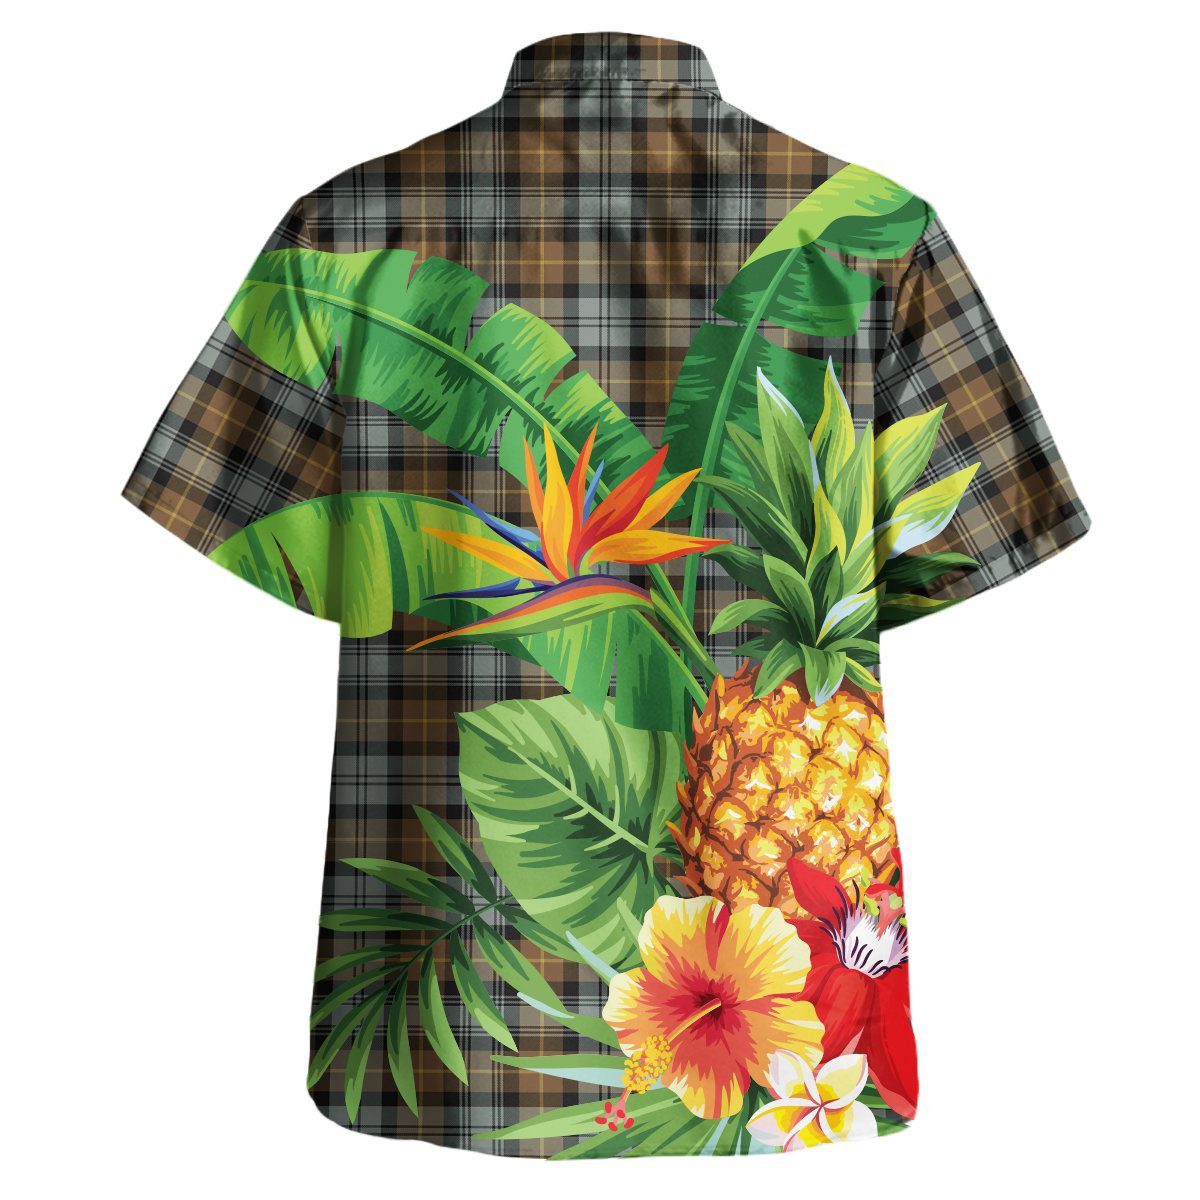 Gordon Weathered Tartan Aloha Shirt version 2